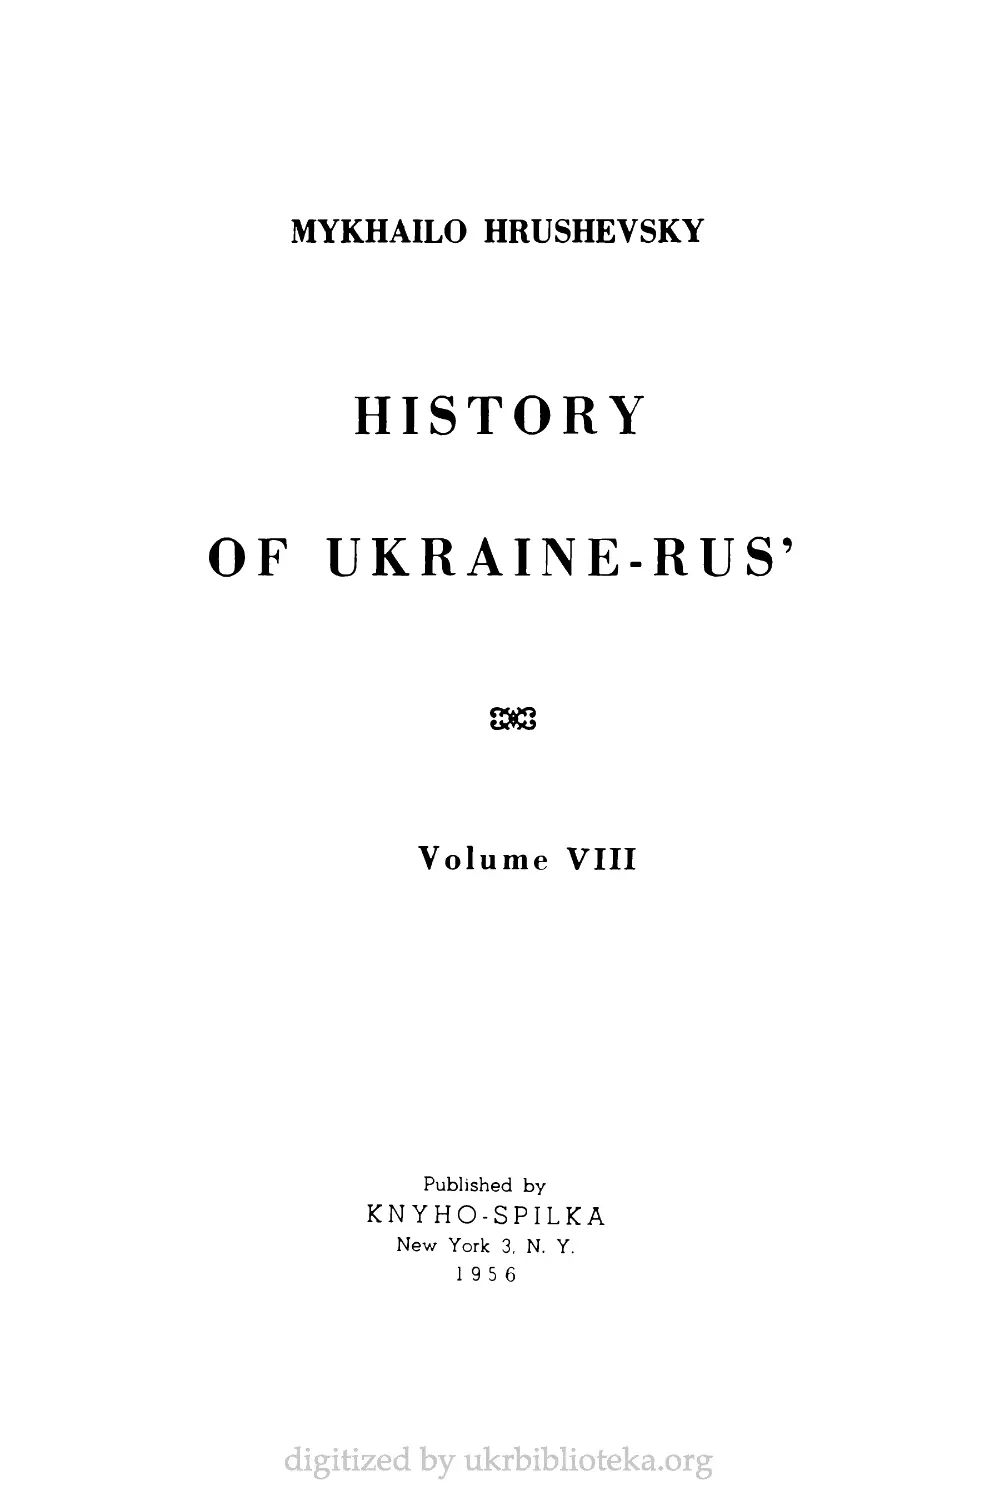 HISTORY OF UKRAINE-RUS’
Volume VIII